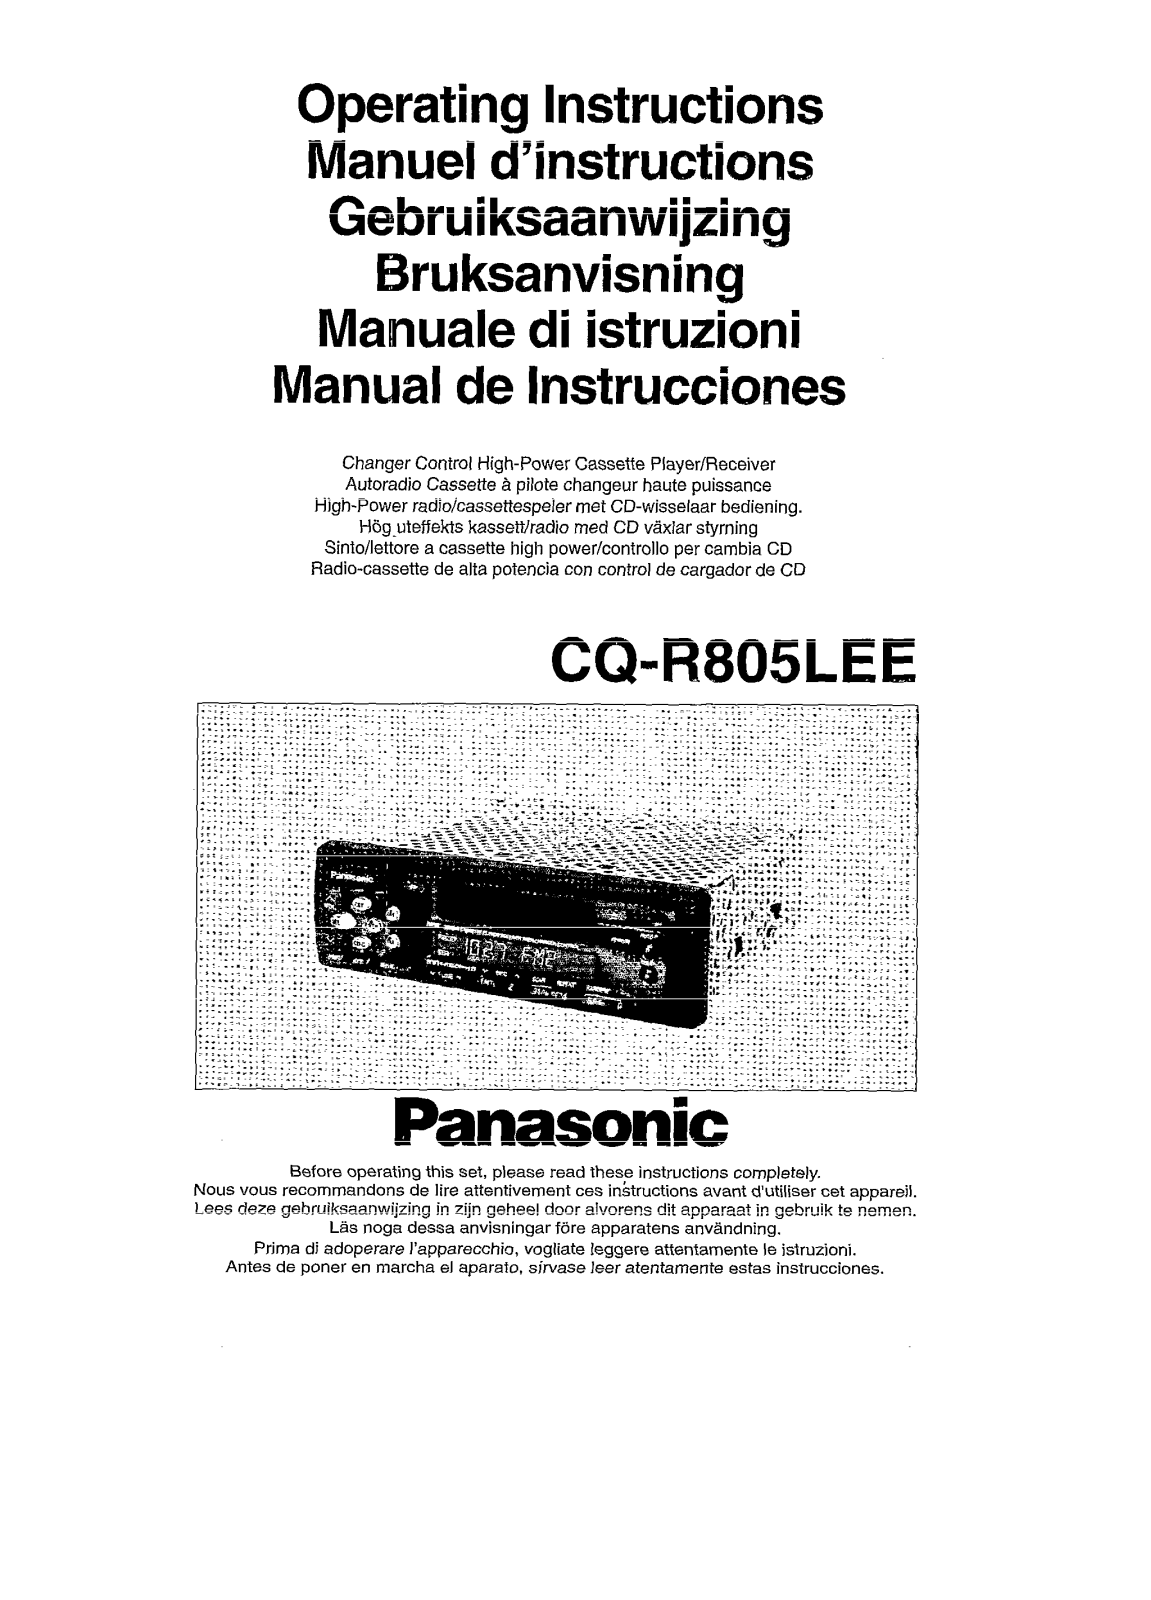 Panasonic CQ-R805 User Manual